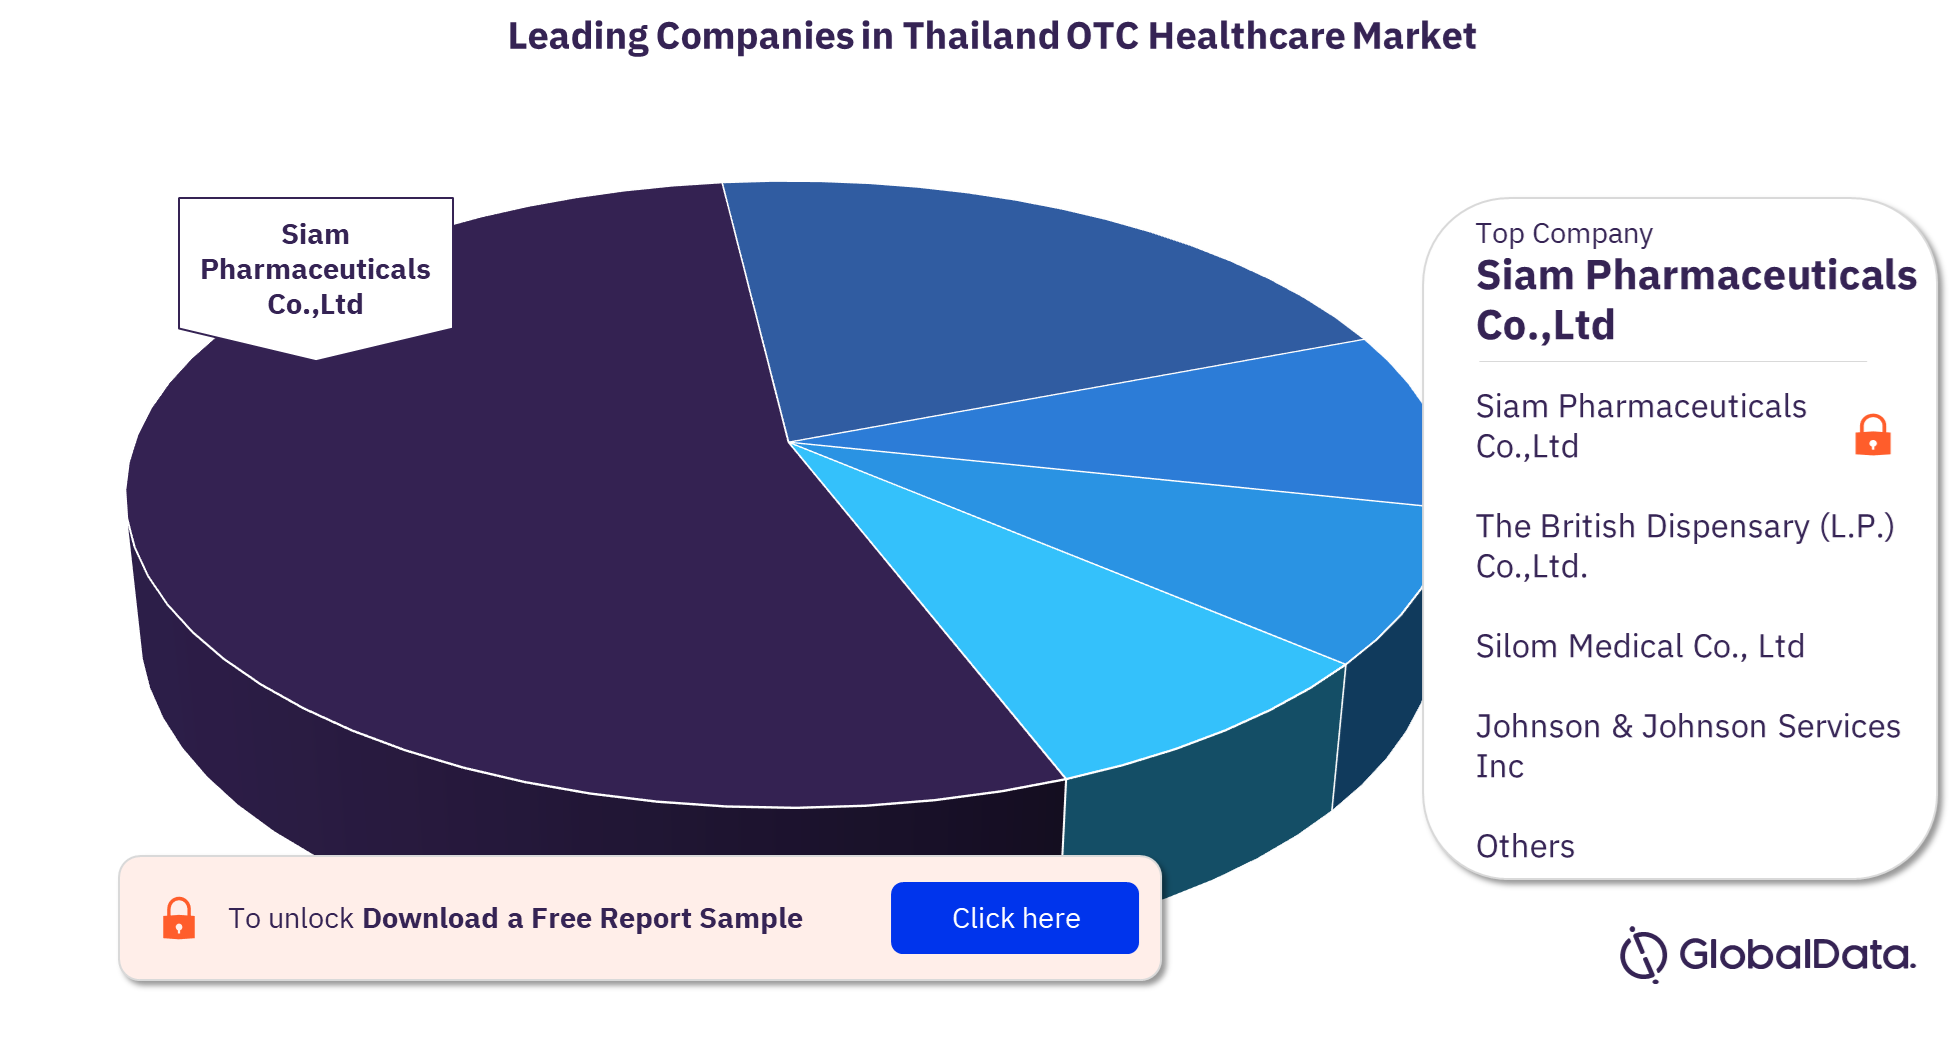 Thailand OTC healthcare market, by leading companies